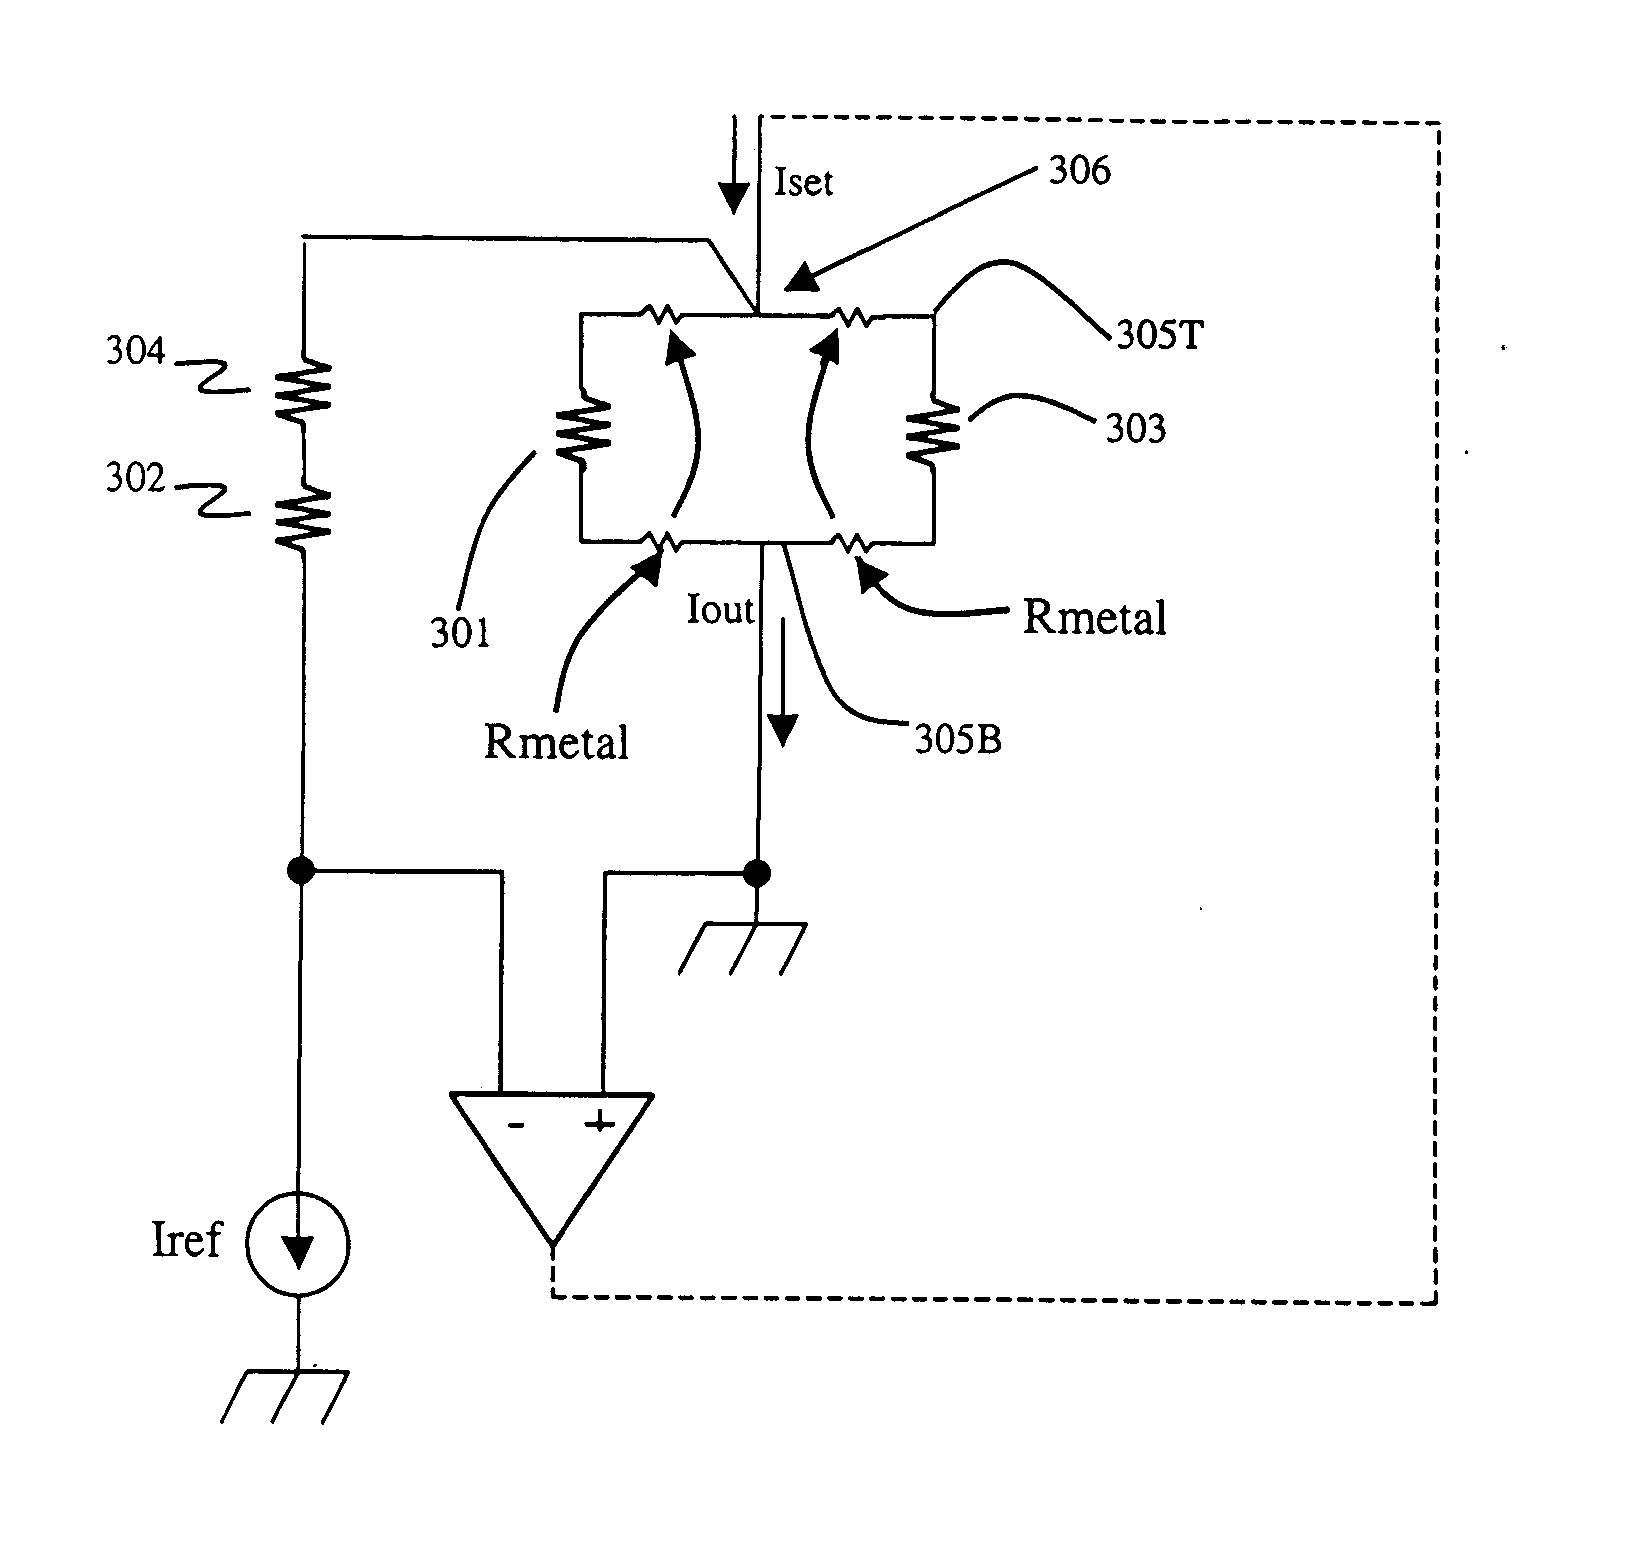 Current sense resistor circuit with average kelvin sense features